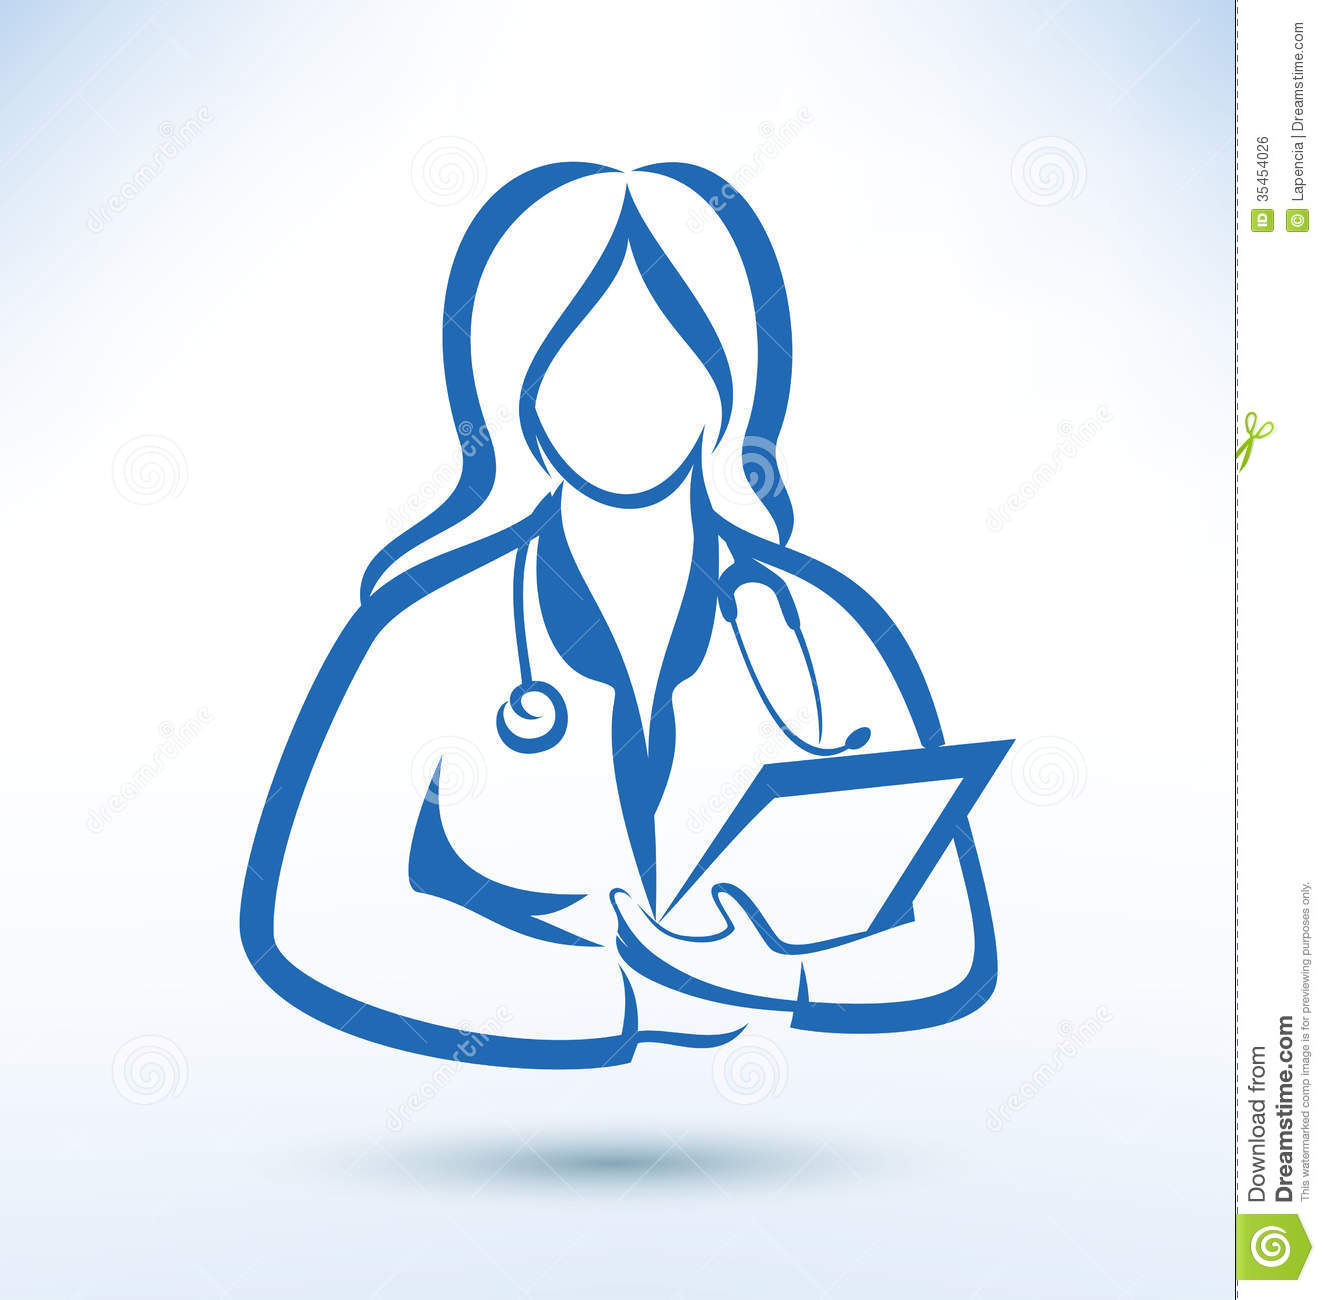 Nurse Medical Worker Royalty Free Stock Image   Image  35454026